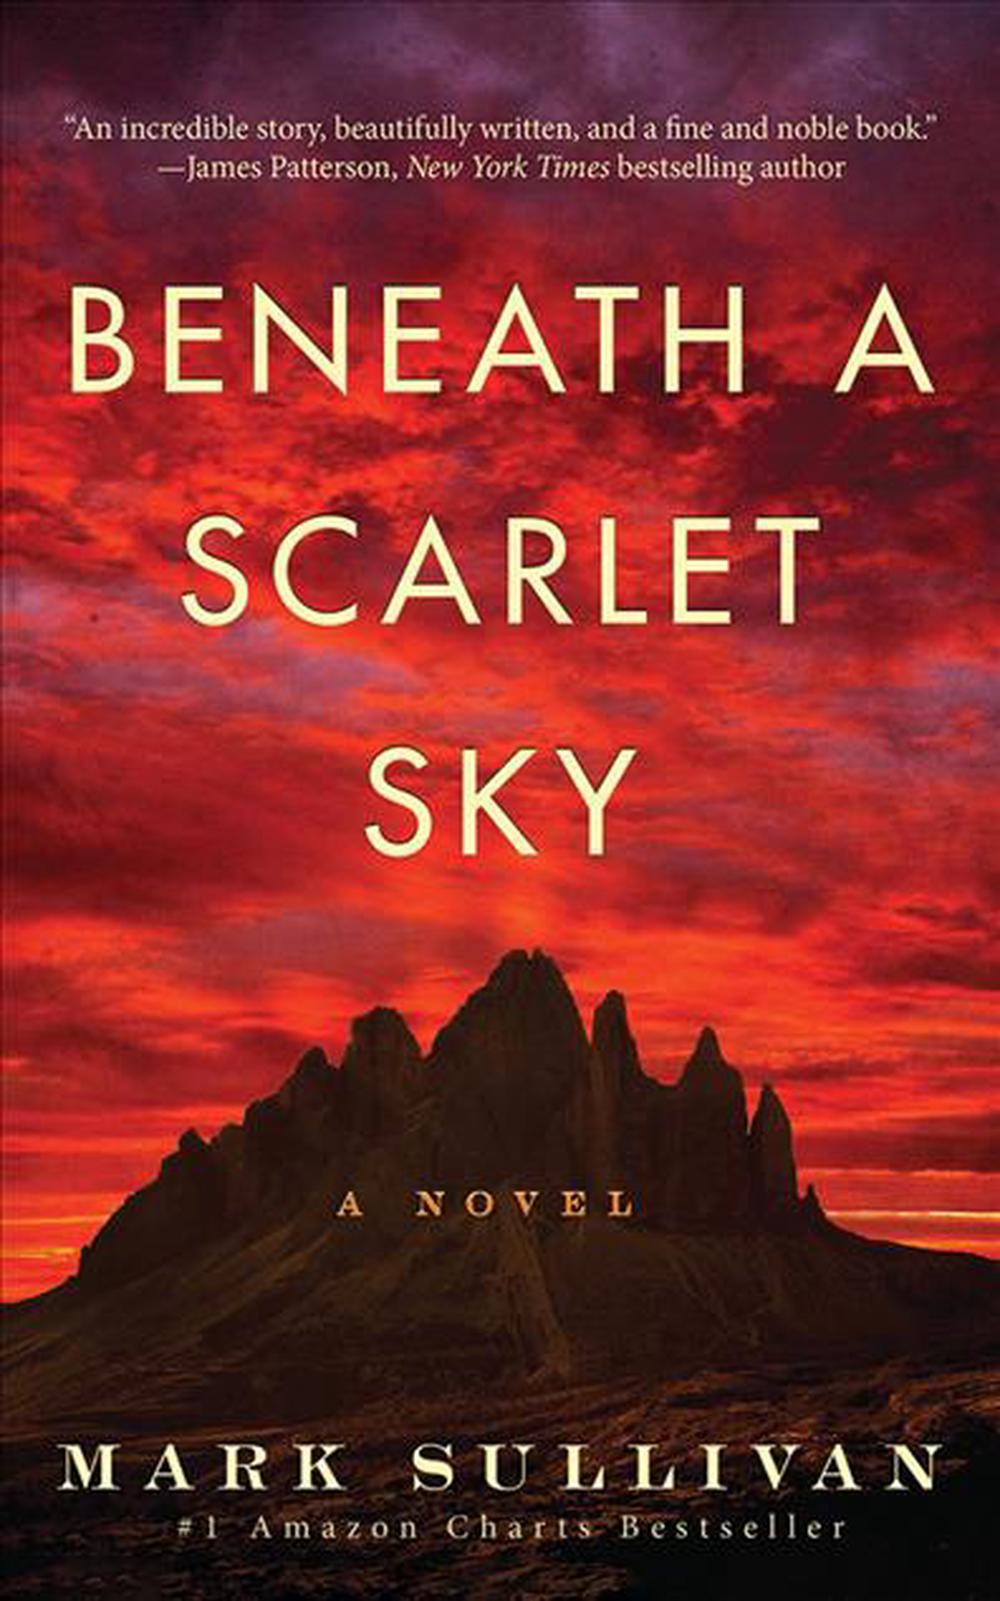 Beneath a Scarlet Sky by Mark Sullivan